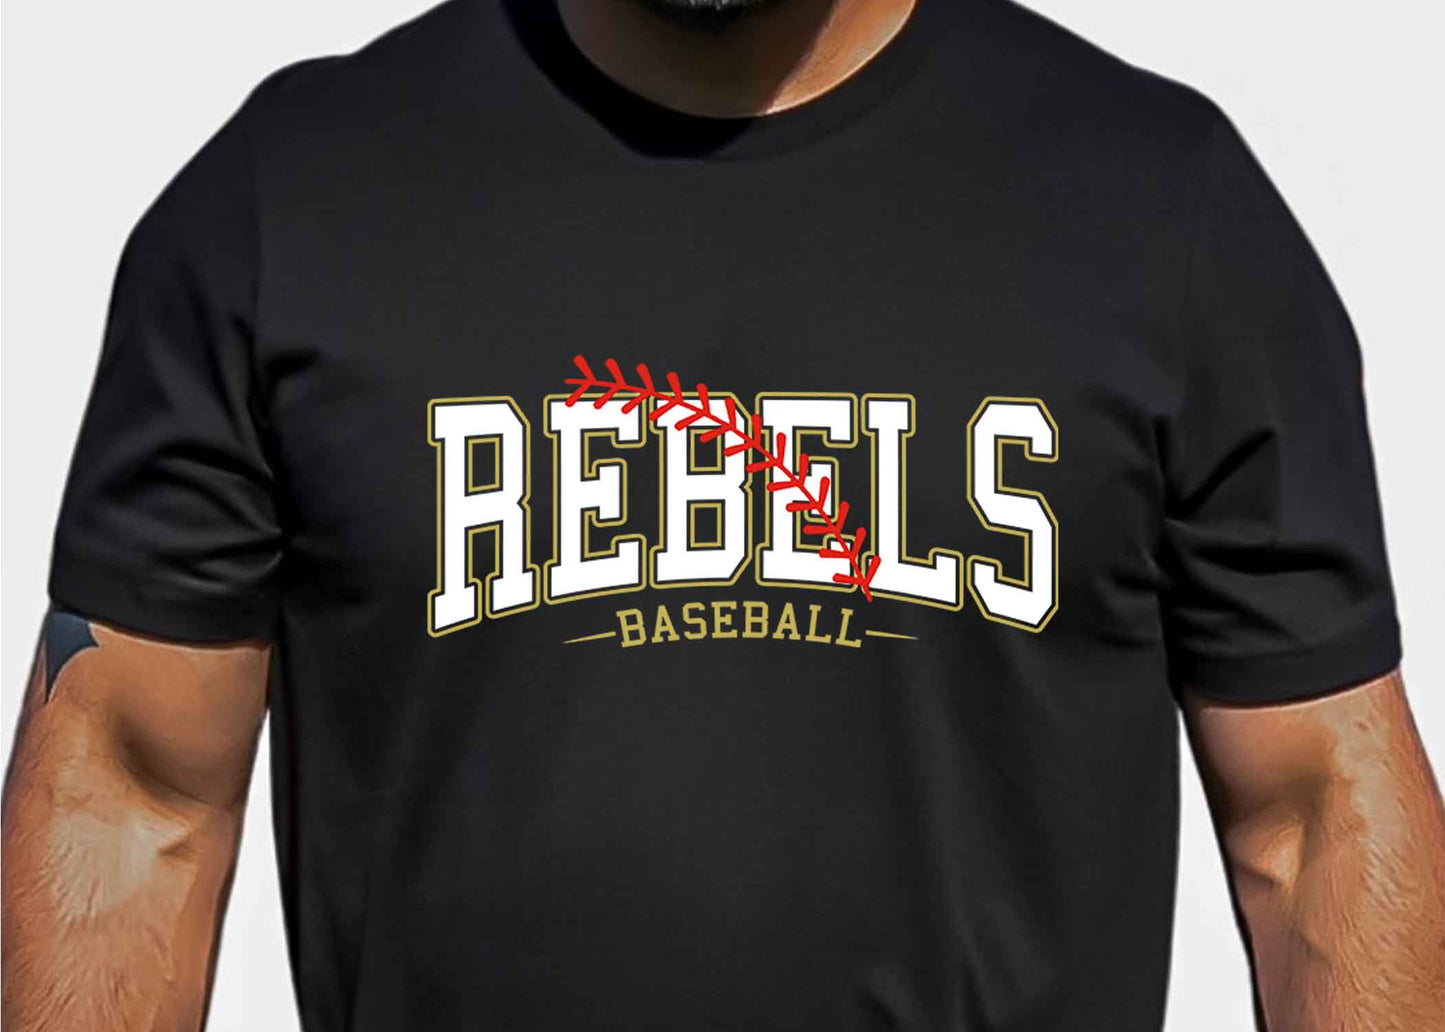 Rebels baseball shirt 2425